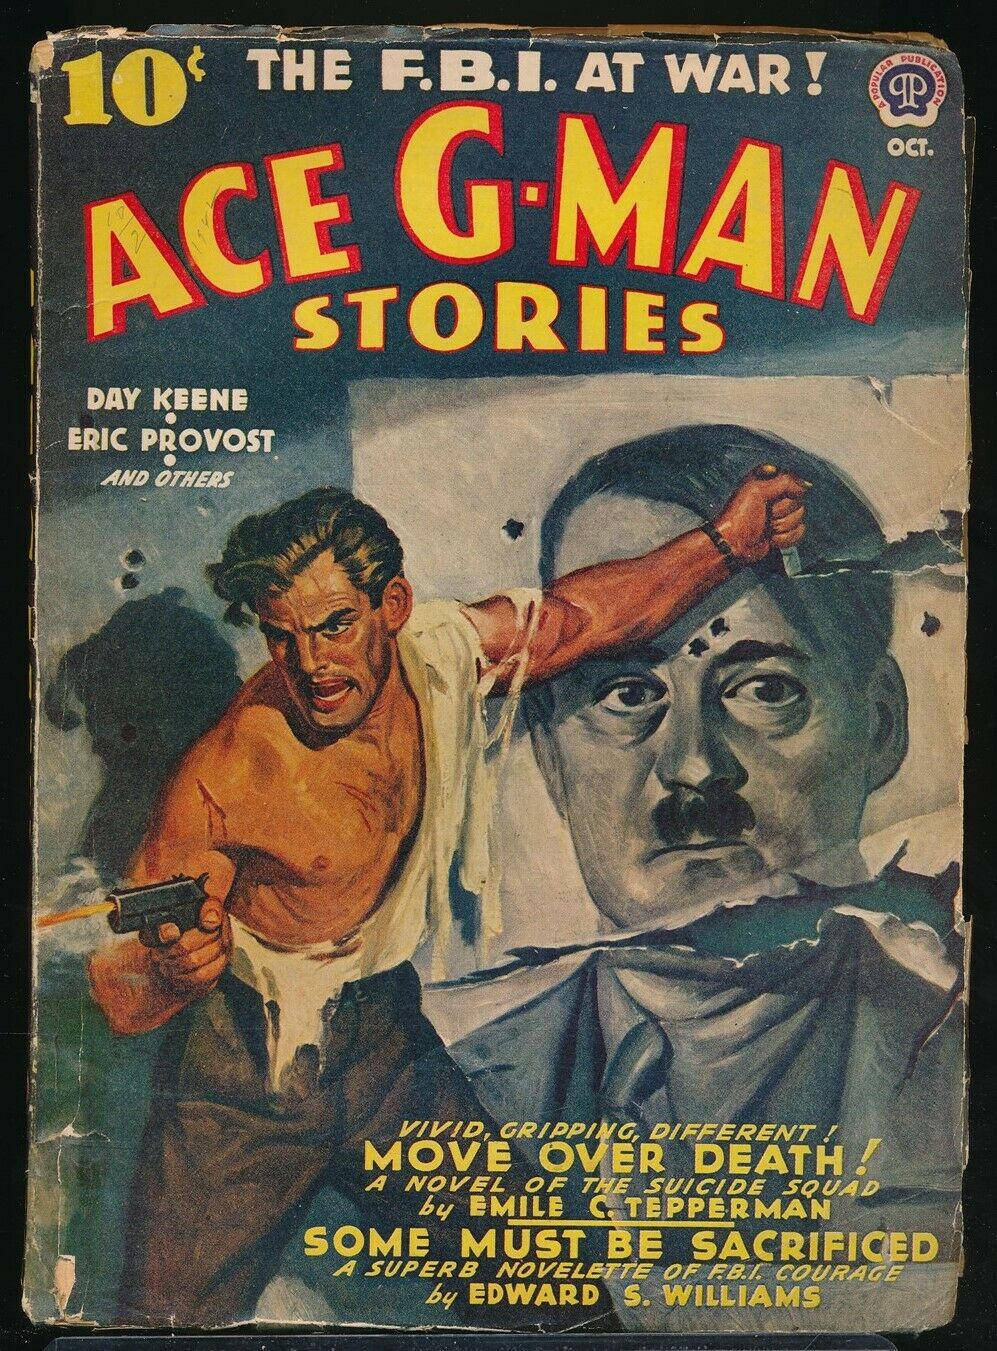 Ace G-Man Stories - October 1942